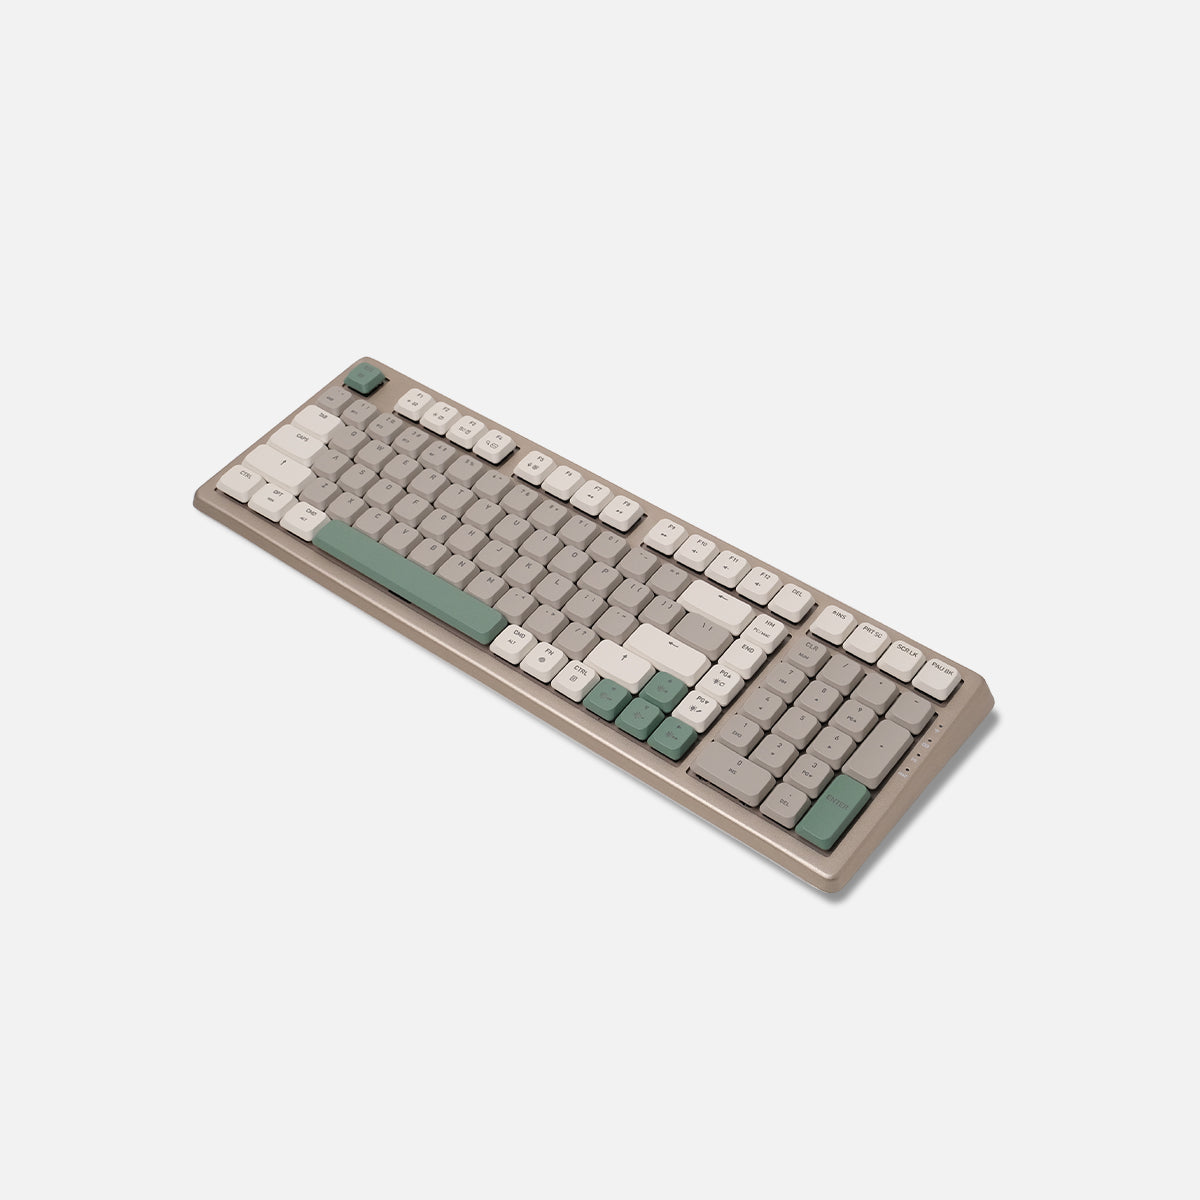 Cascade 98% keyboard hot-swappable nirkabel ramping